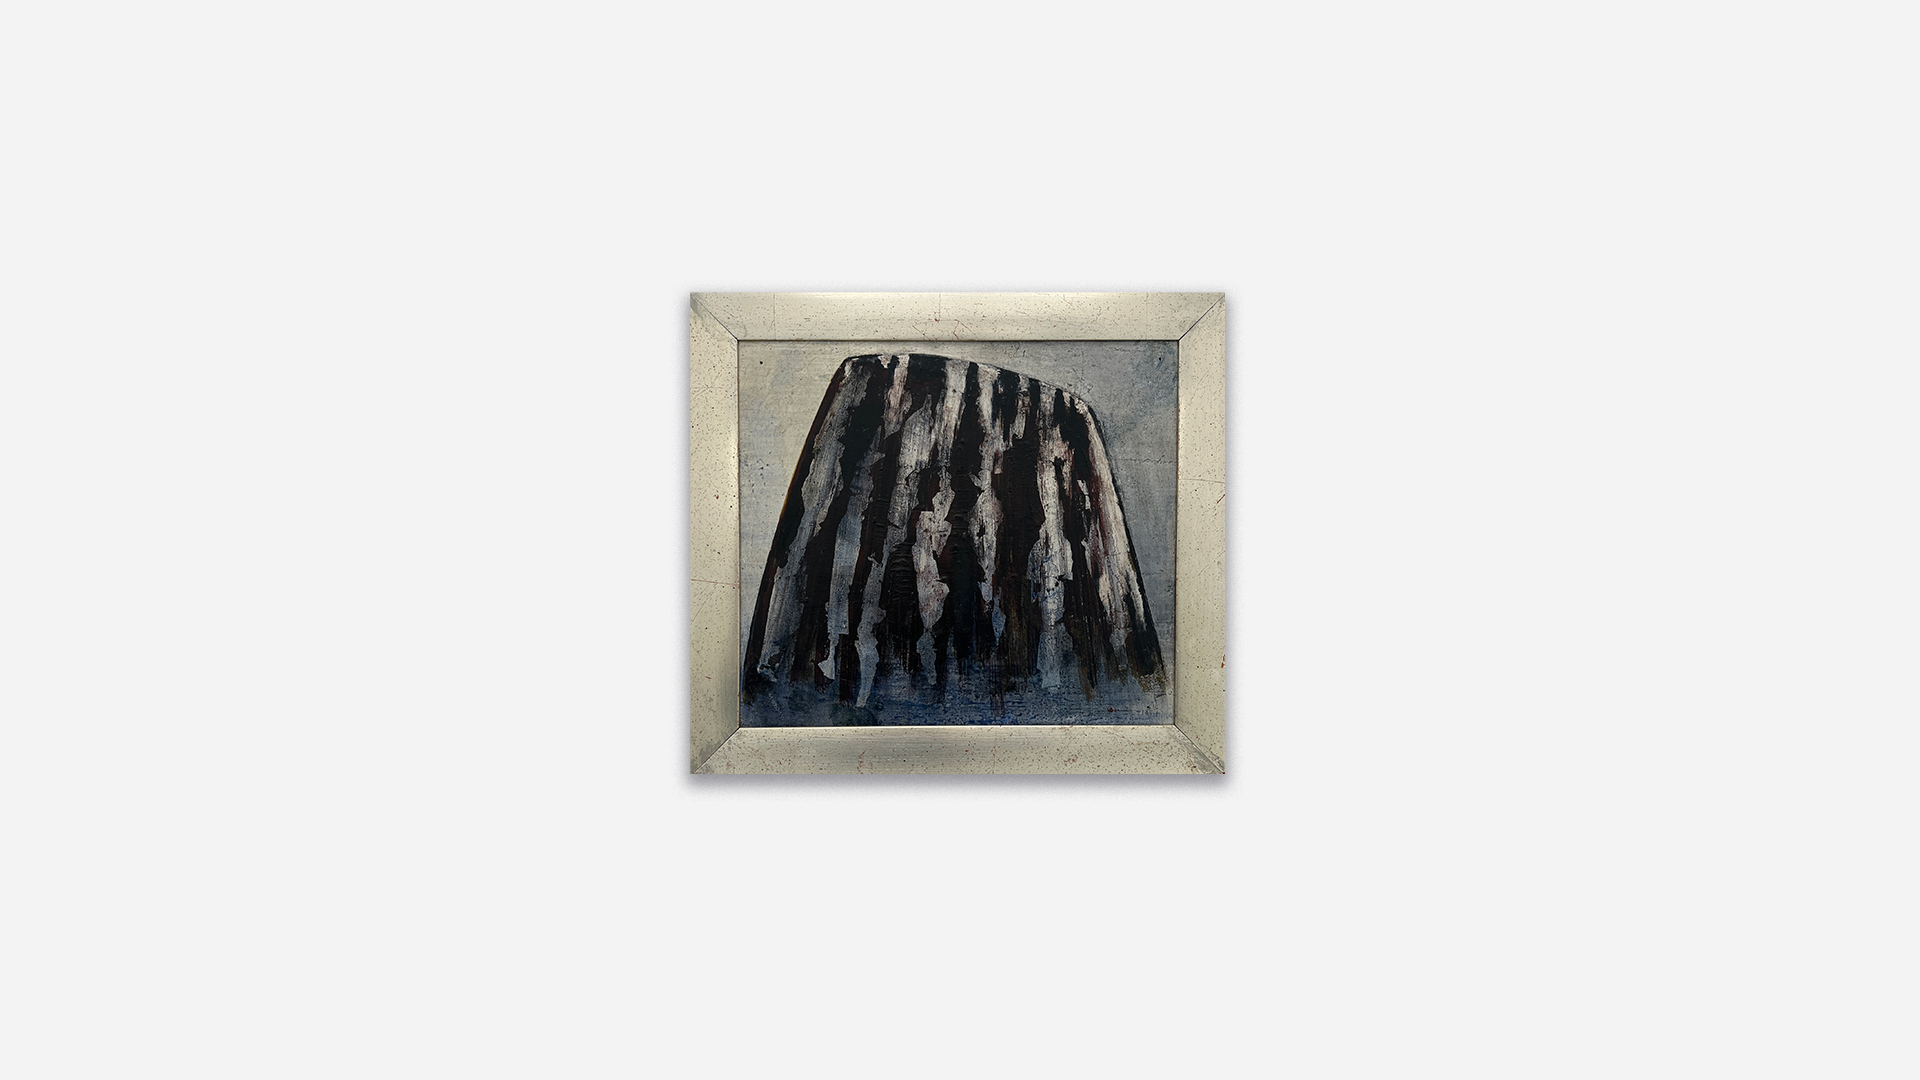 Anna-Eva Bergman, Petite montagne, 1957, 1957, Tempera and metal leaf on wood panel, 37.5 x 41.5 cm